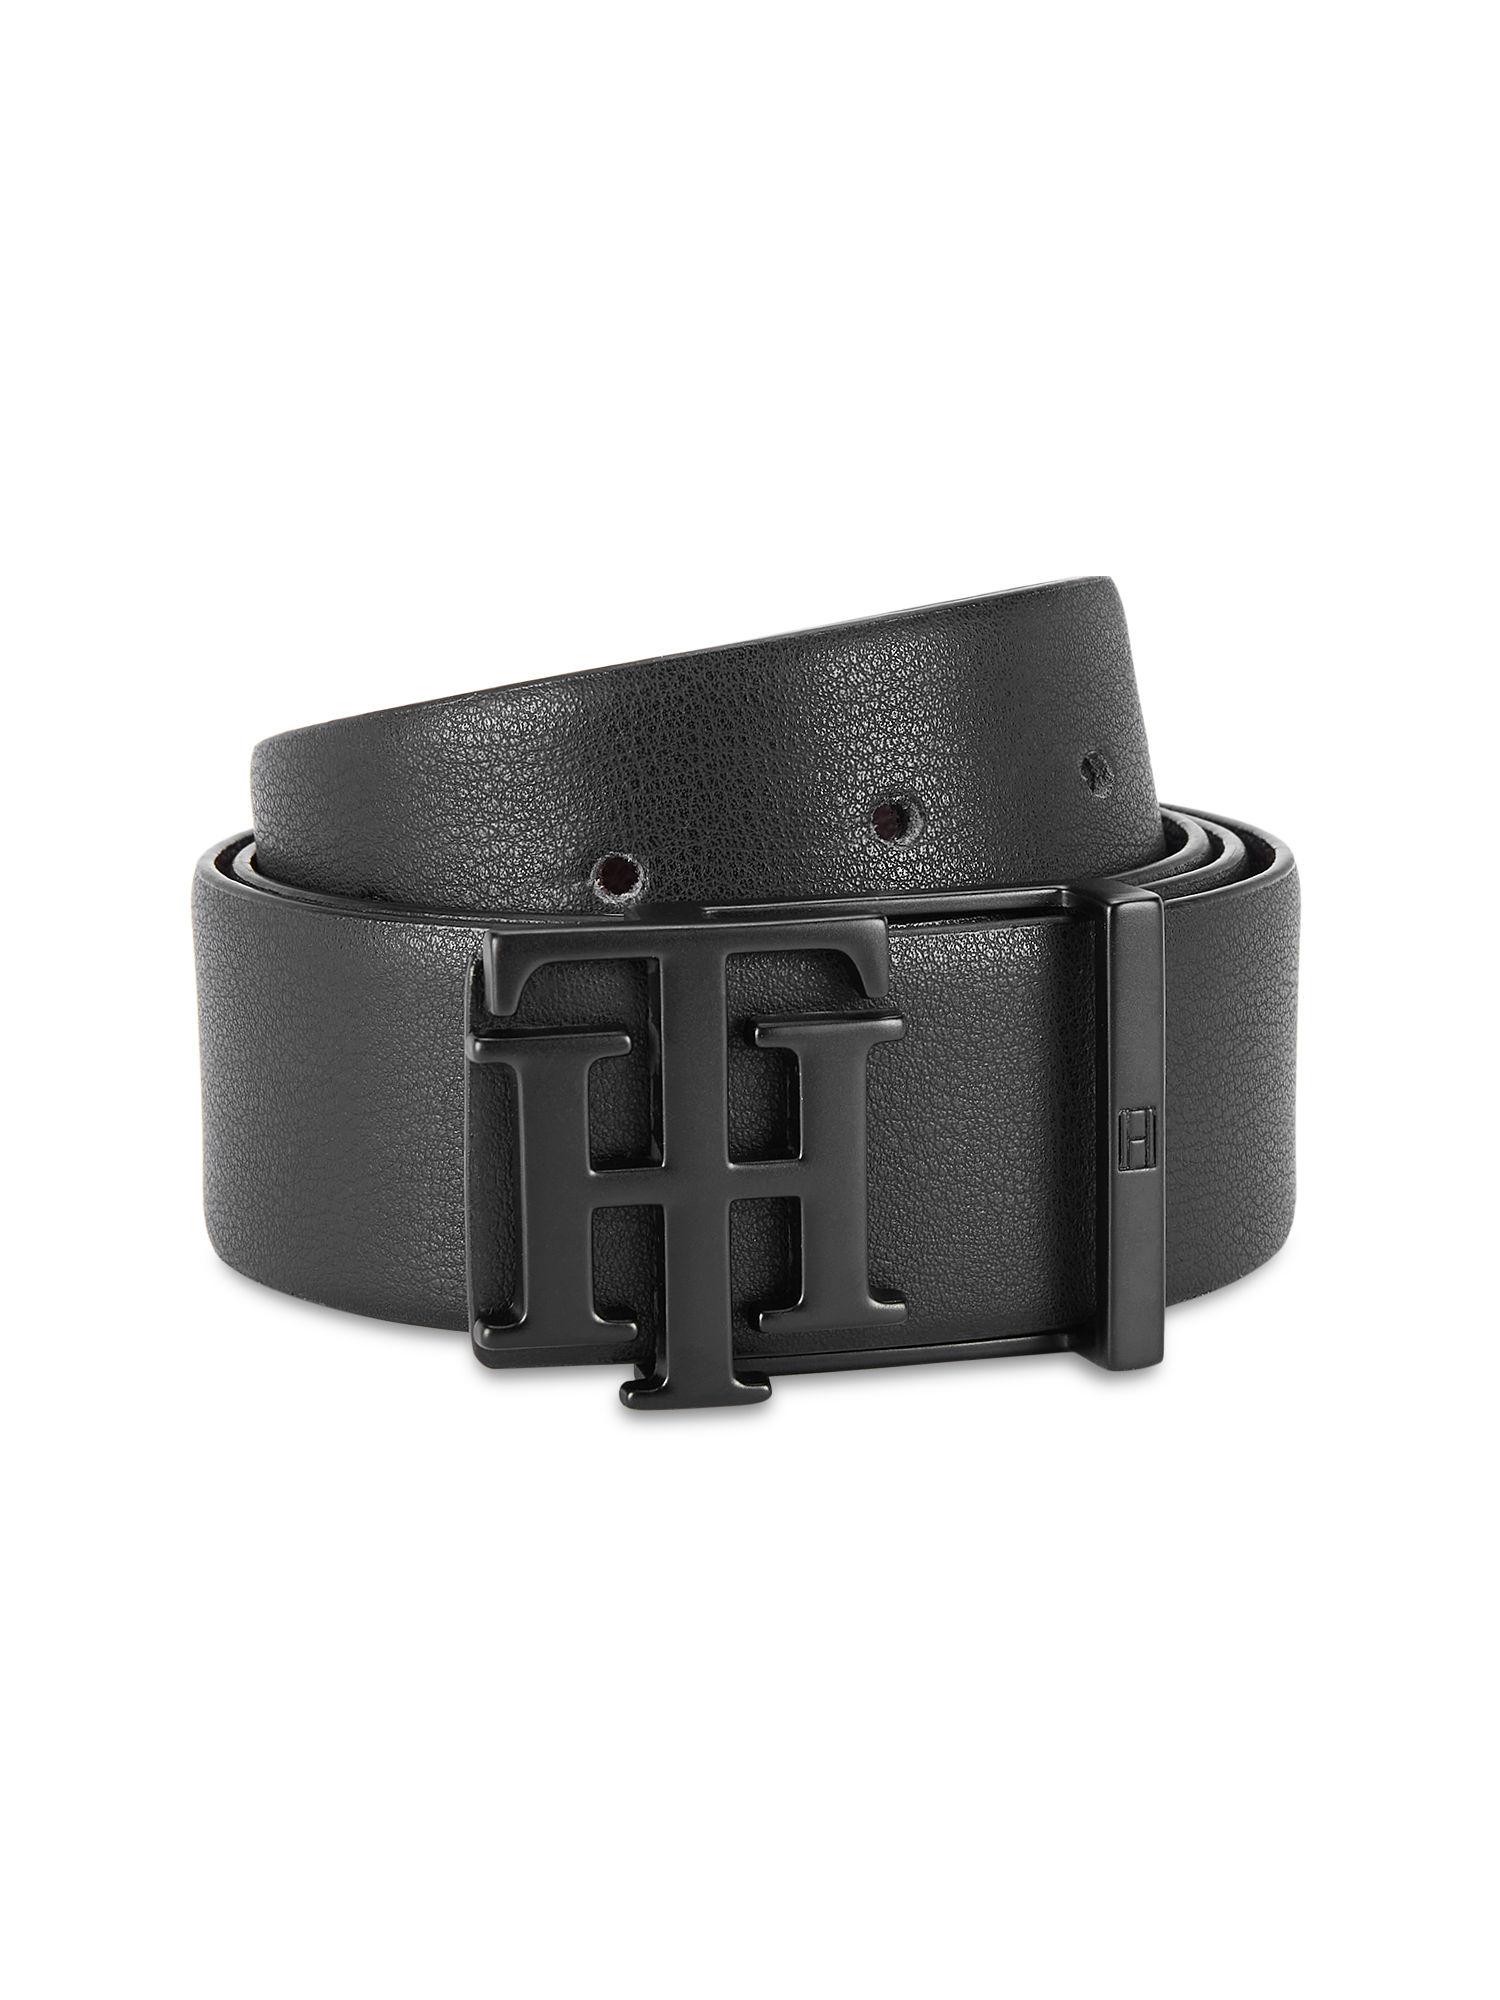 assens men leather reversible belt - black & brown